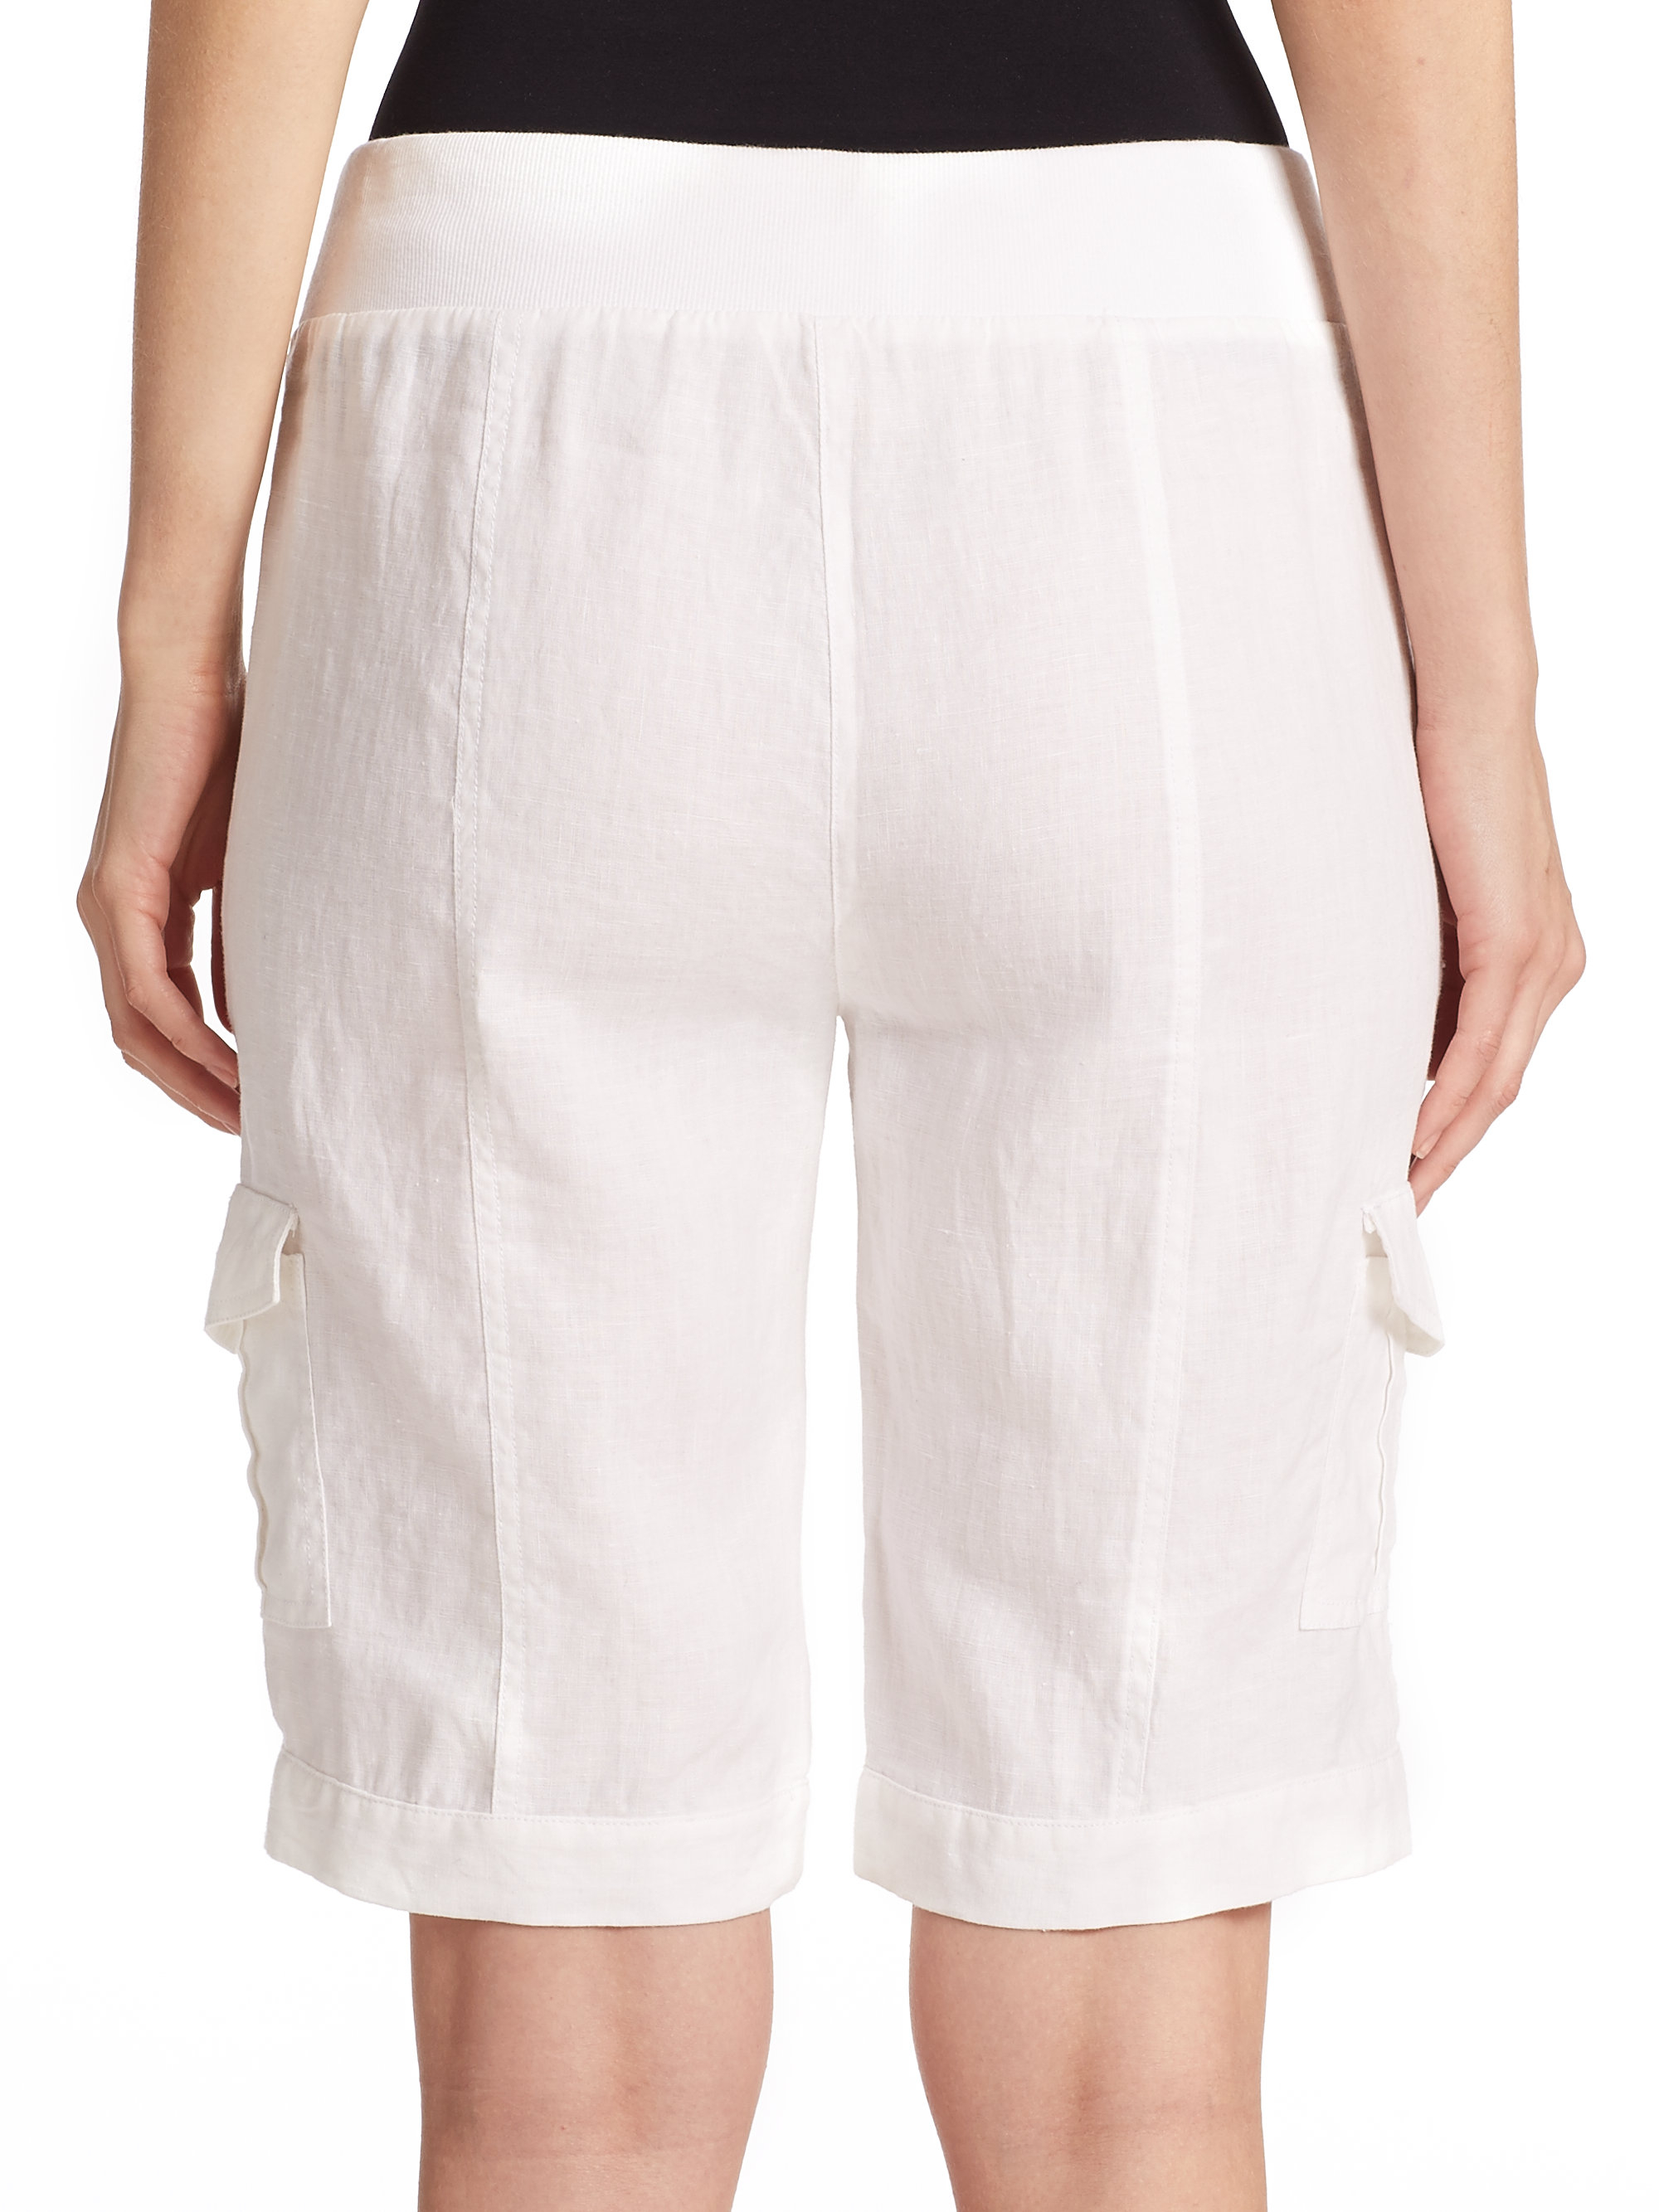 Lyst - Eileen Fisher Linen Drawstring Shorts in White